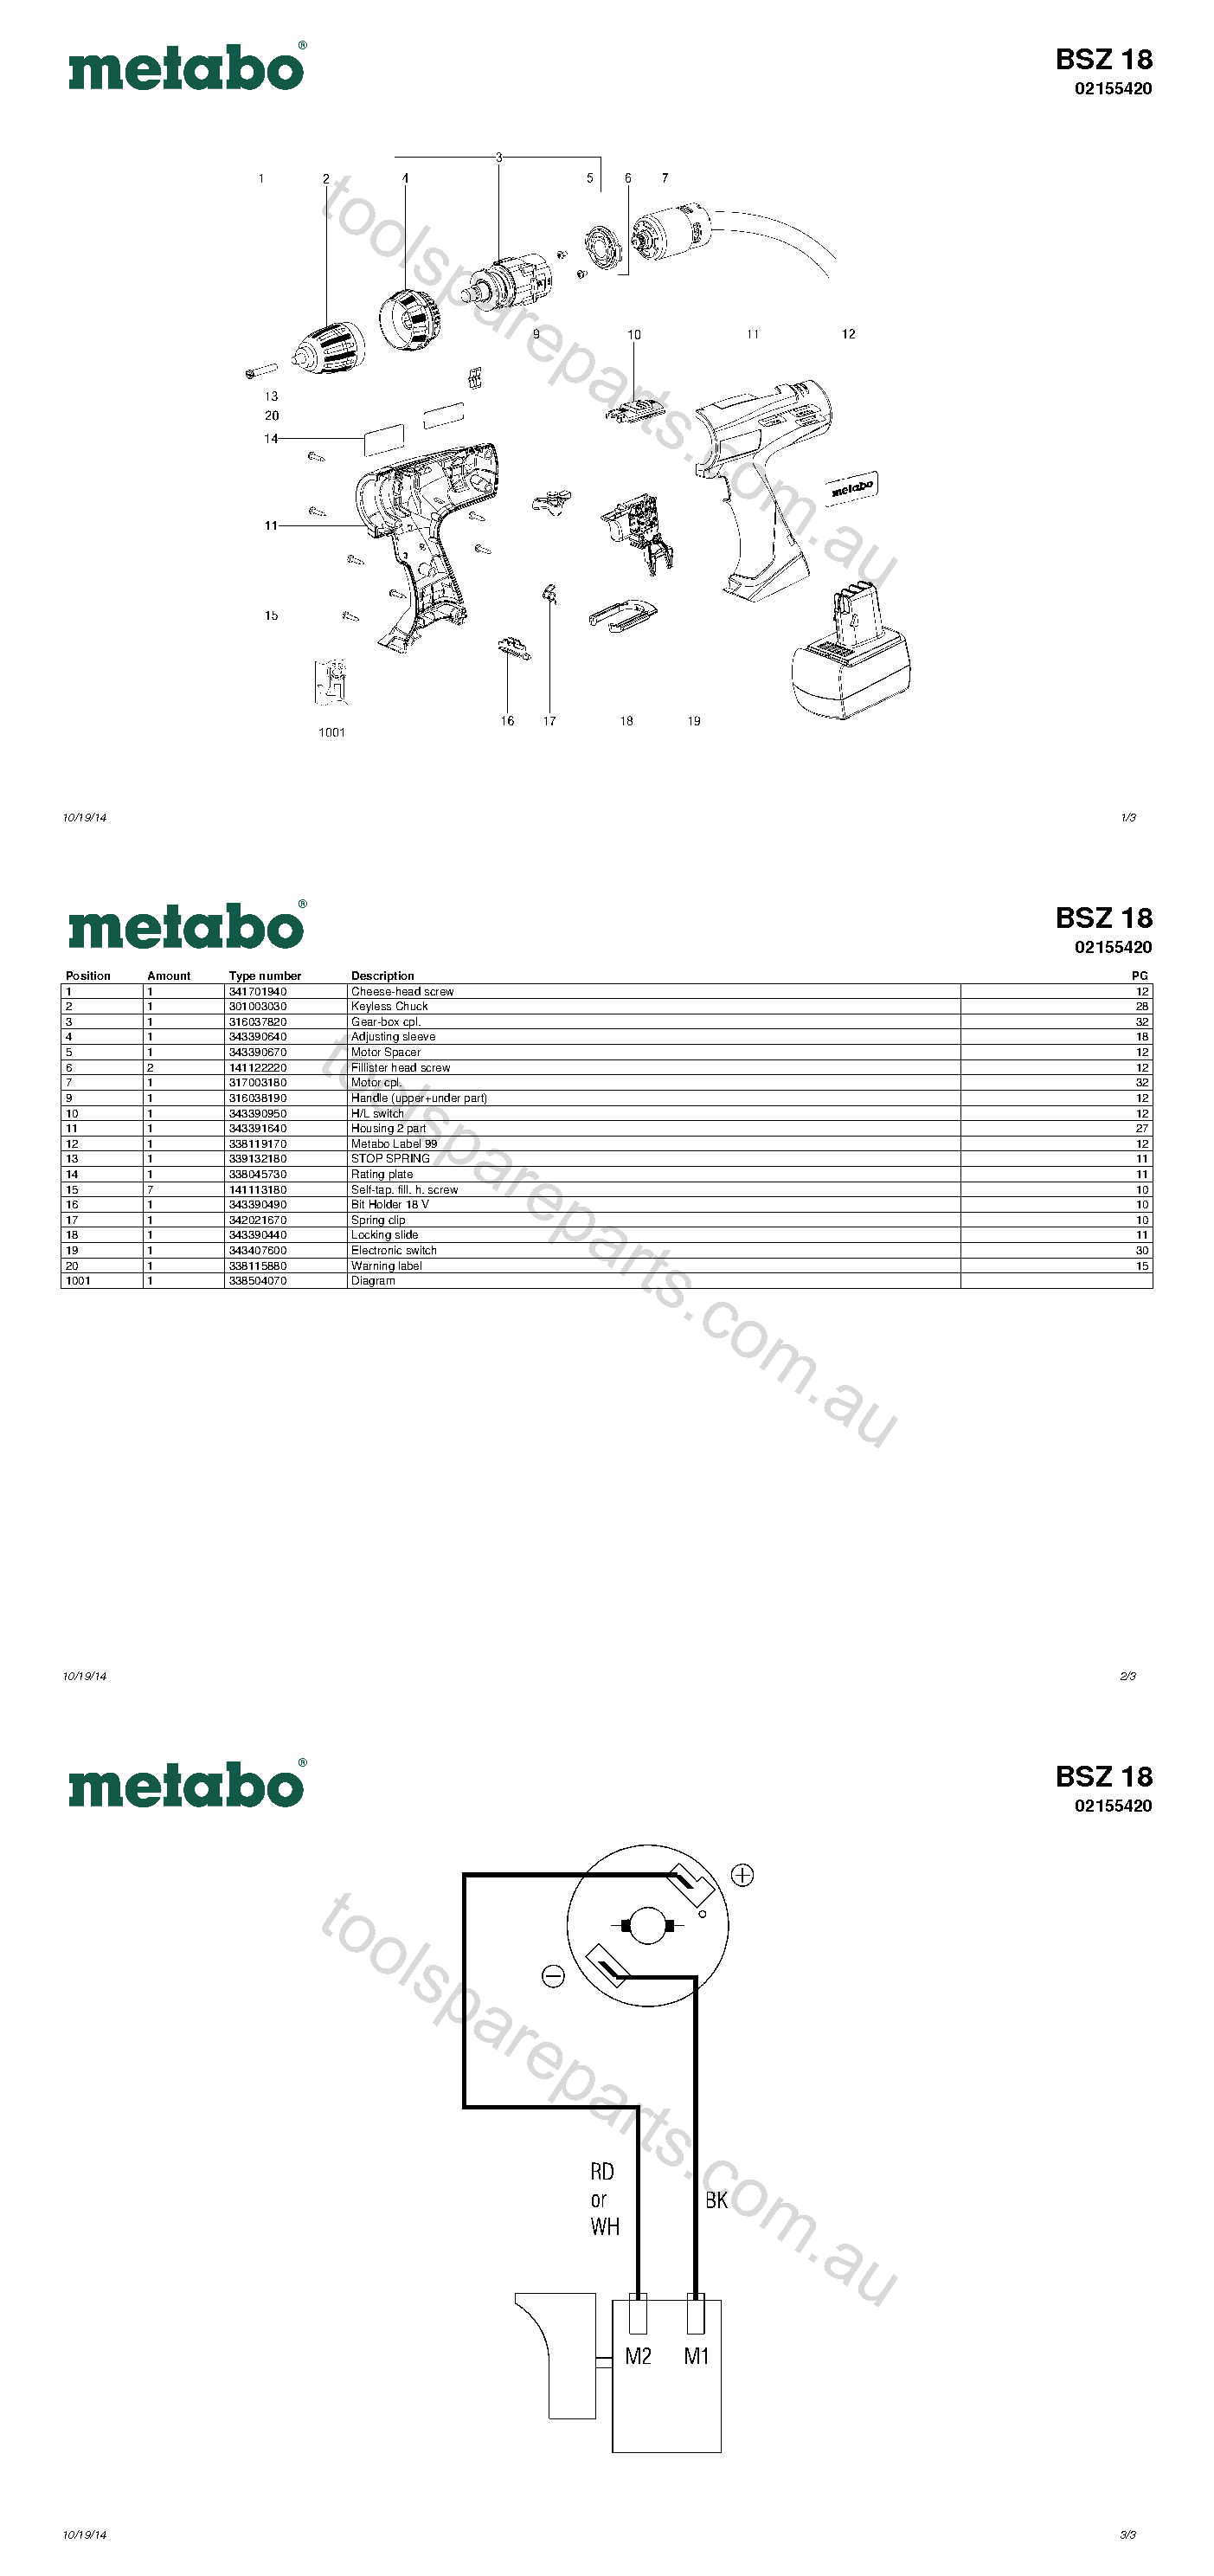 Metabo BSZ 18 02155420  Diagram 1